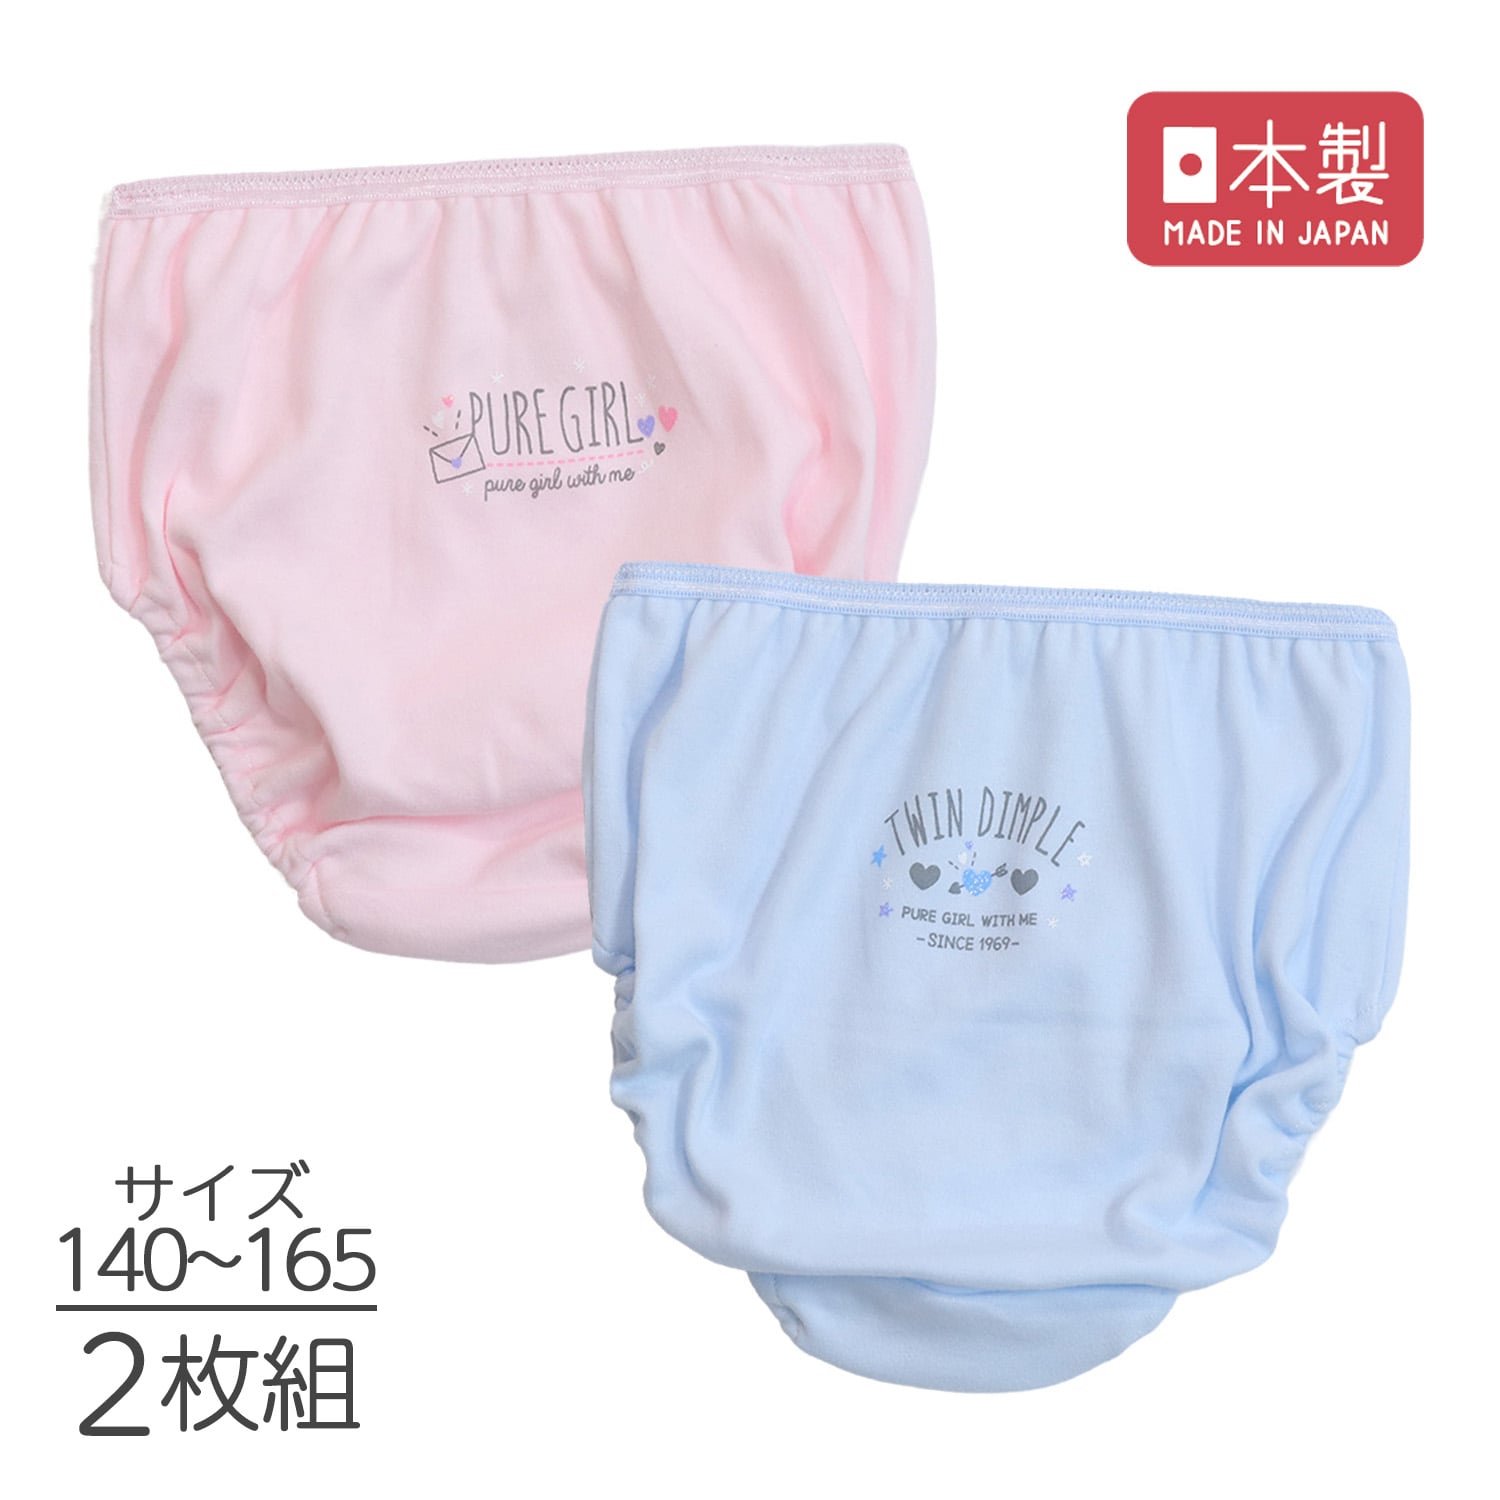 【SOKY】日本製綿100%総柄ショーツ2色セット(綿100%・通年・通学)【ガールズ ジュニア】